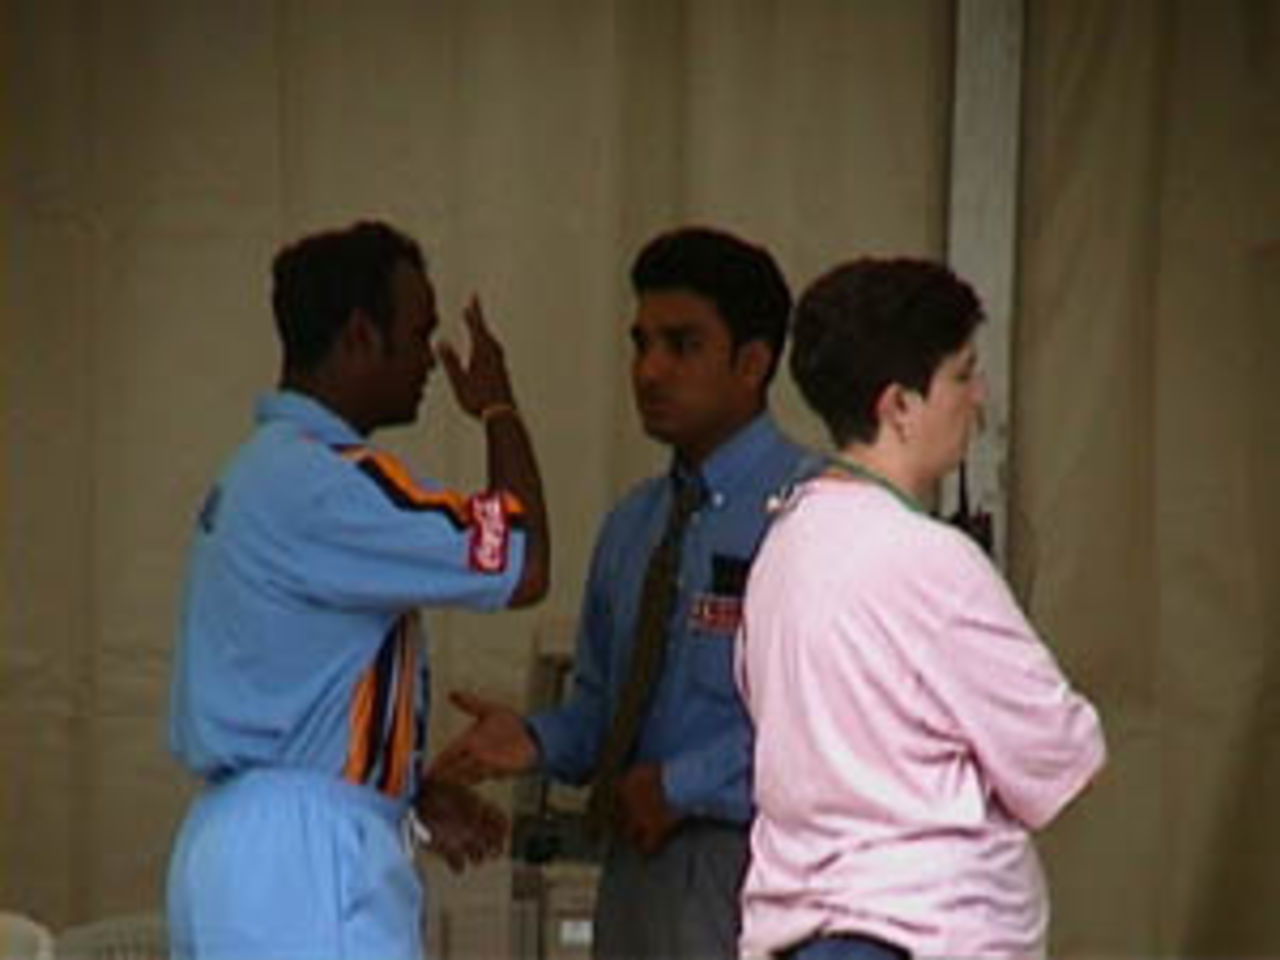 Vinod Kambli getting a tip or two from Sanjay Manjrekar, currently a Television commentator, India v Zimbabwe (2nd ODI), Coca-Cola Singapore Challenge, 1999-2000, Kallang Ground, Singapore, 4 Sep 1999